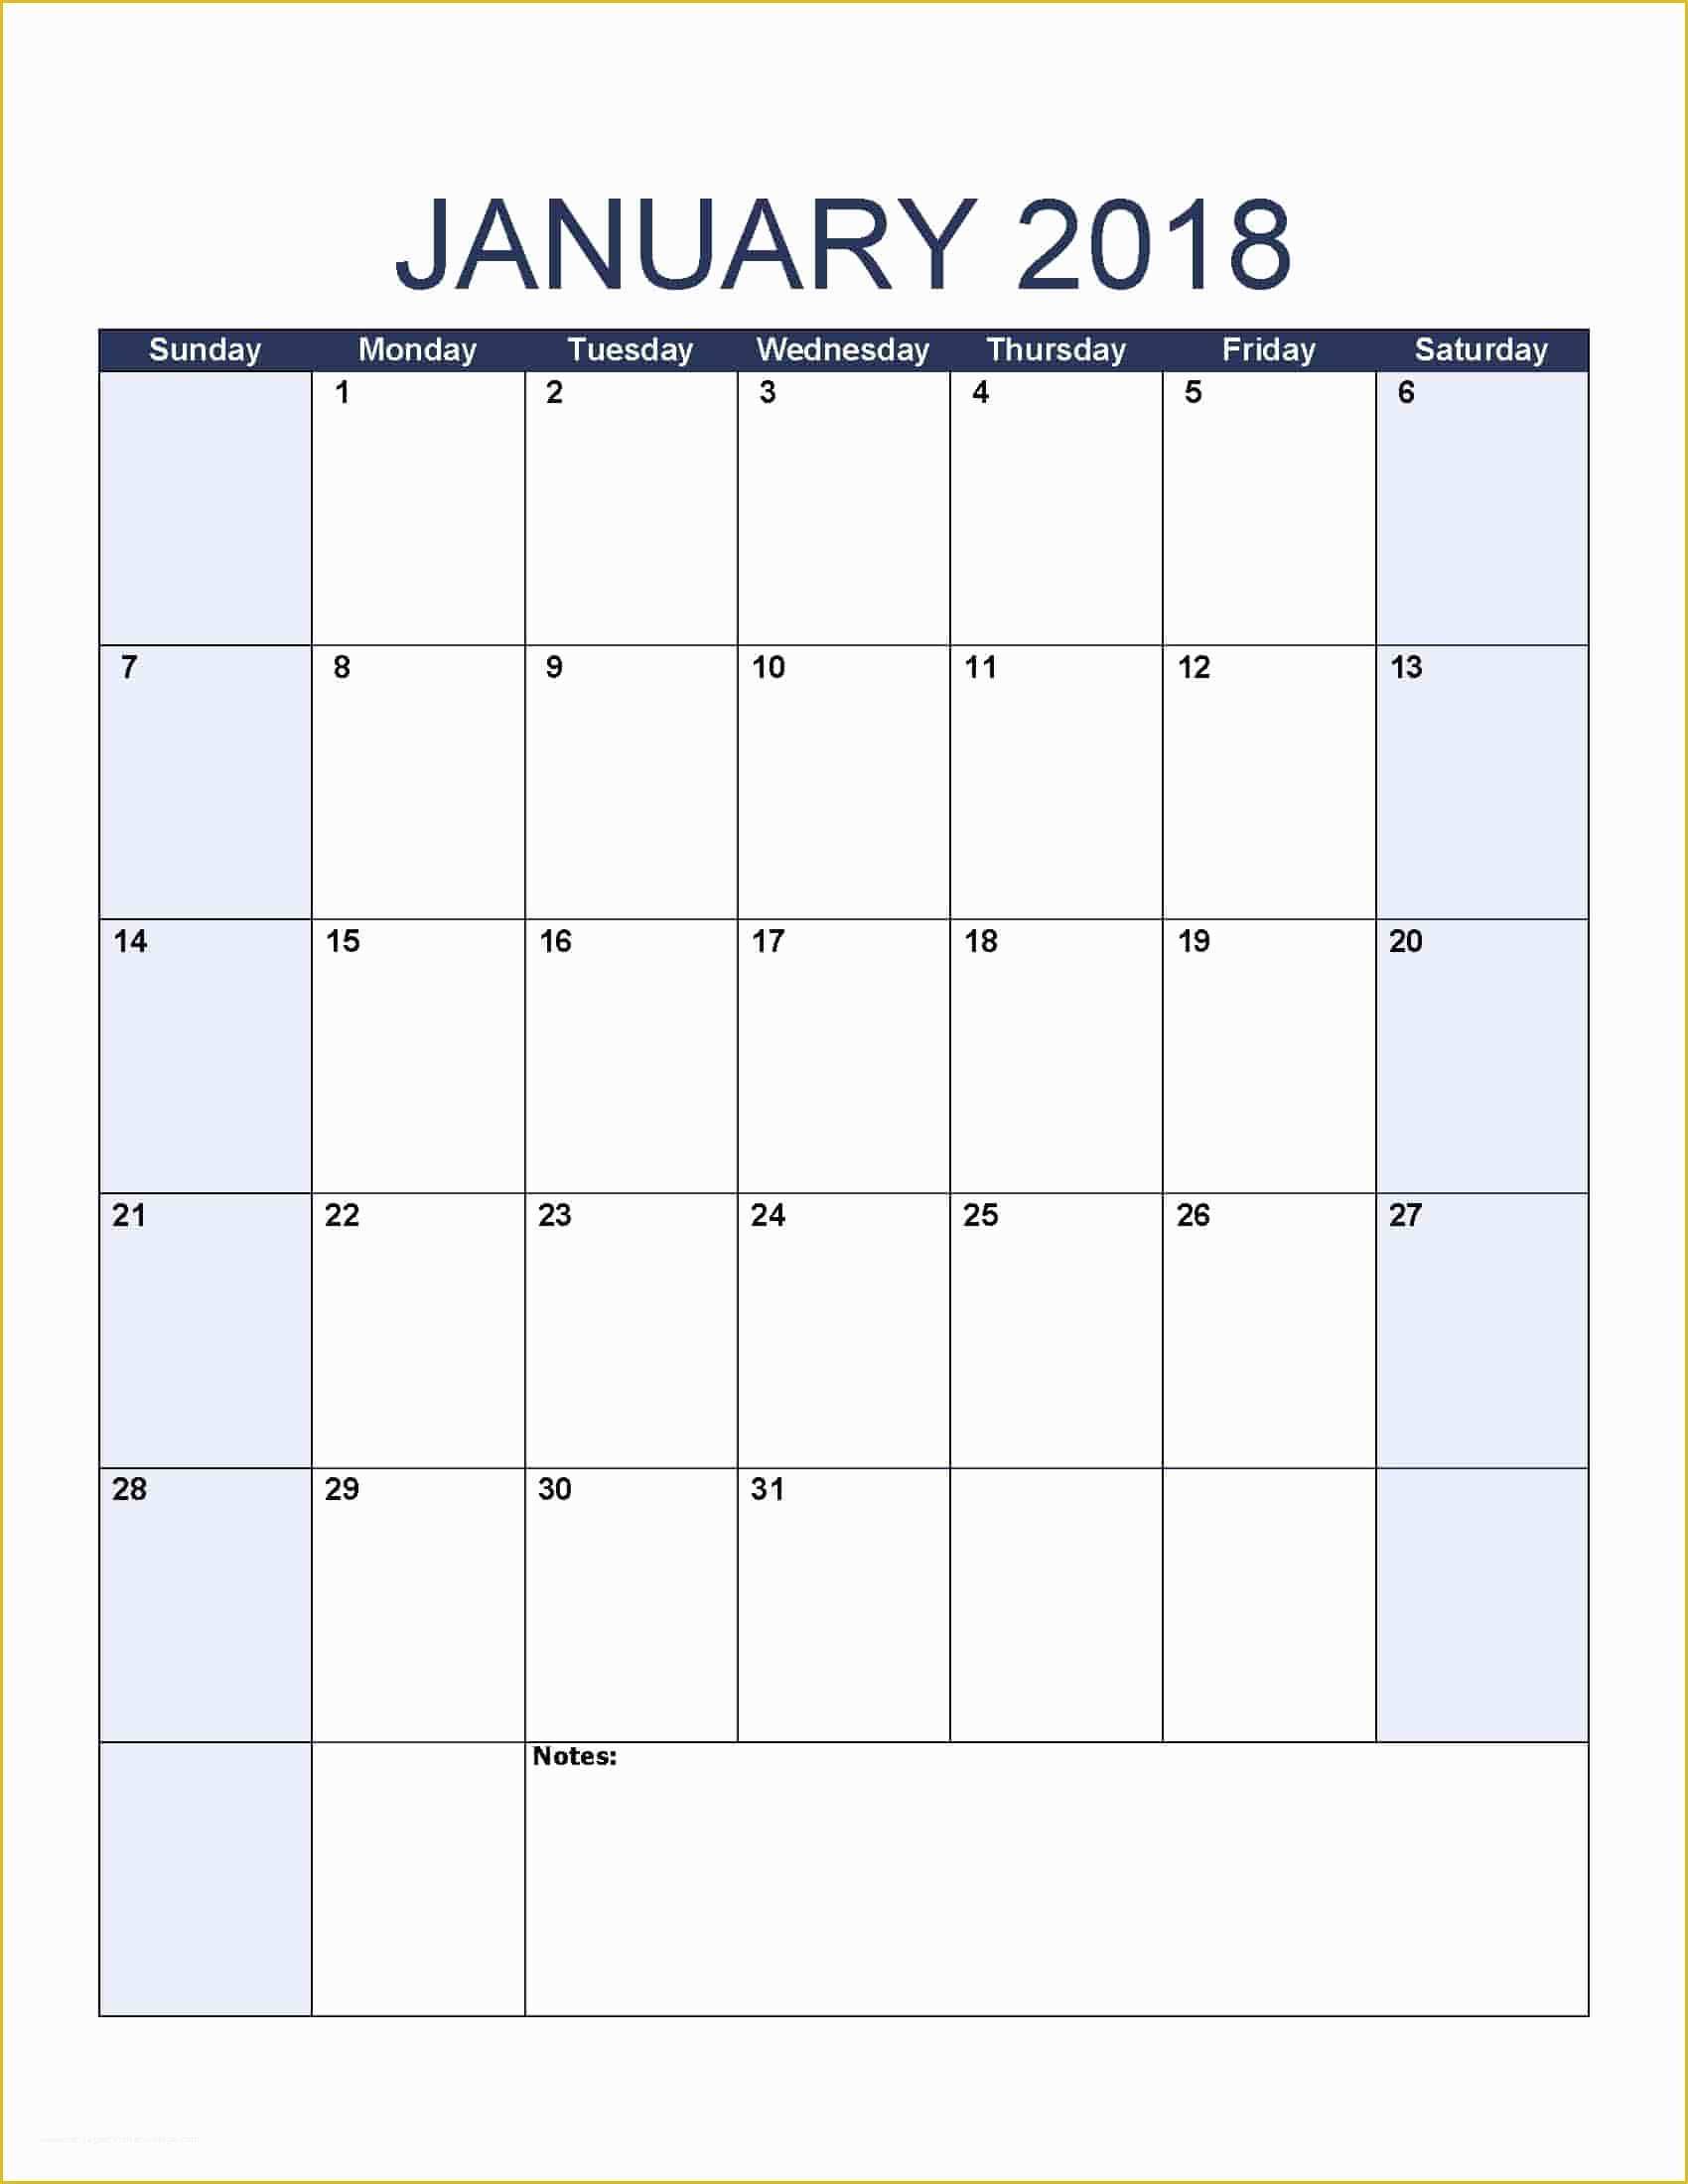 Free Downloadable Calendar Template Of January 2018 Calendar Free Printable Calendar Templates